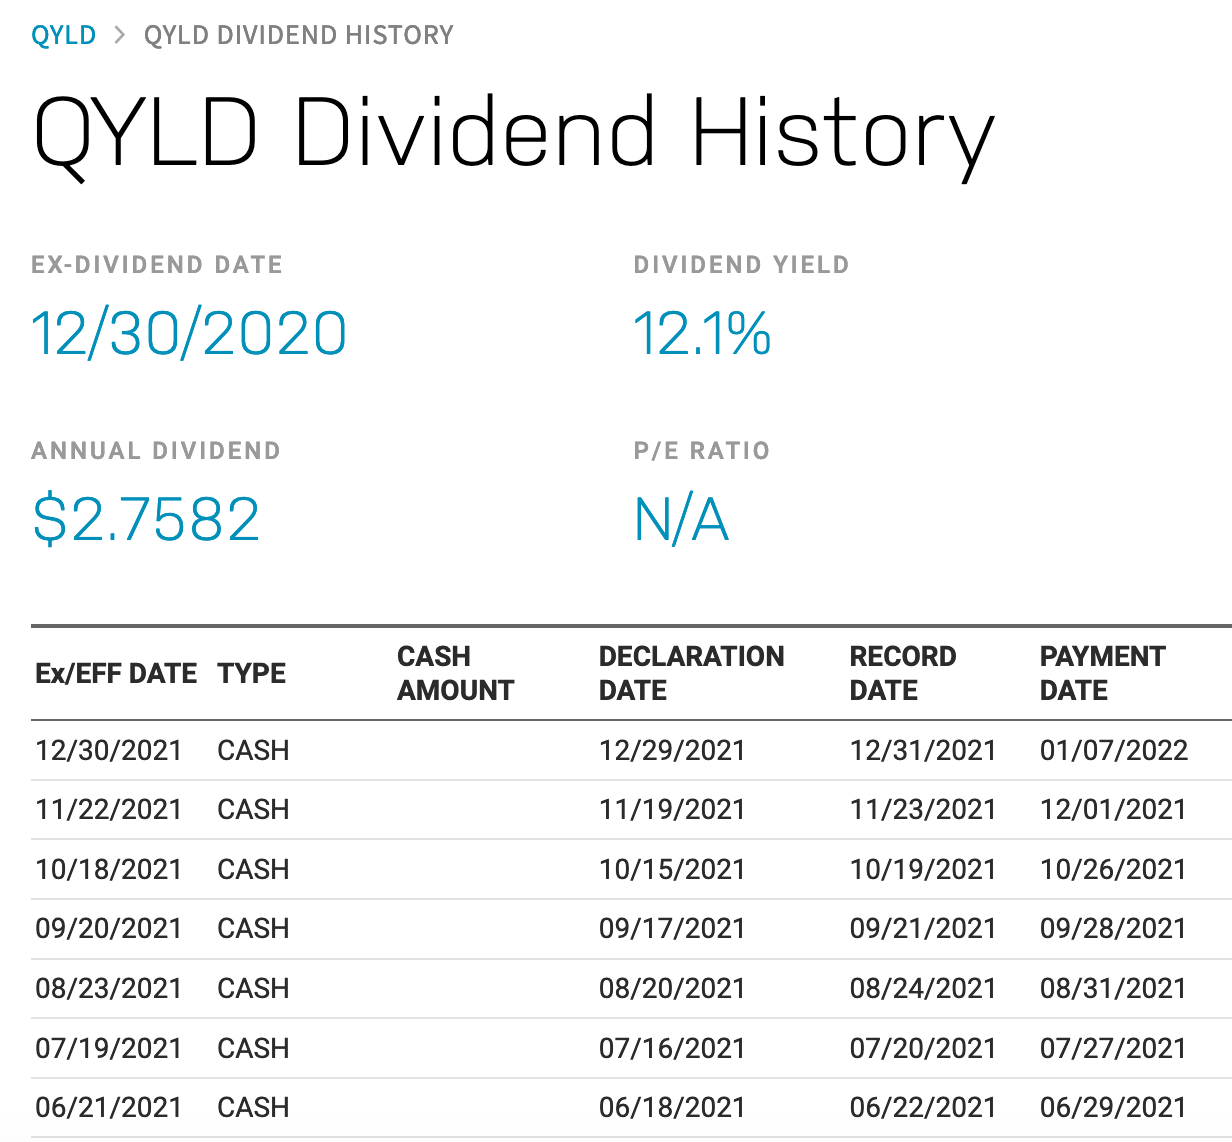 QYLD dividend history